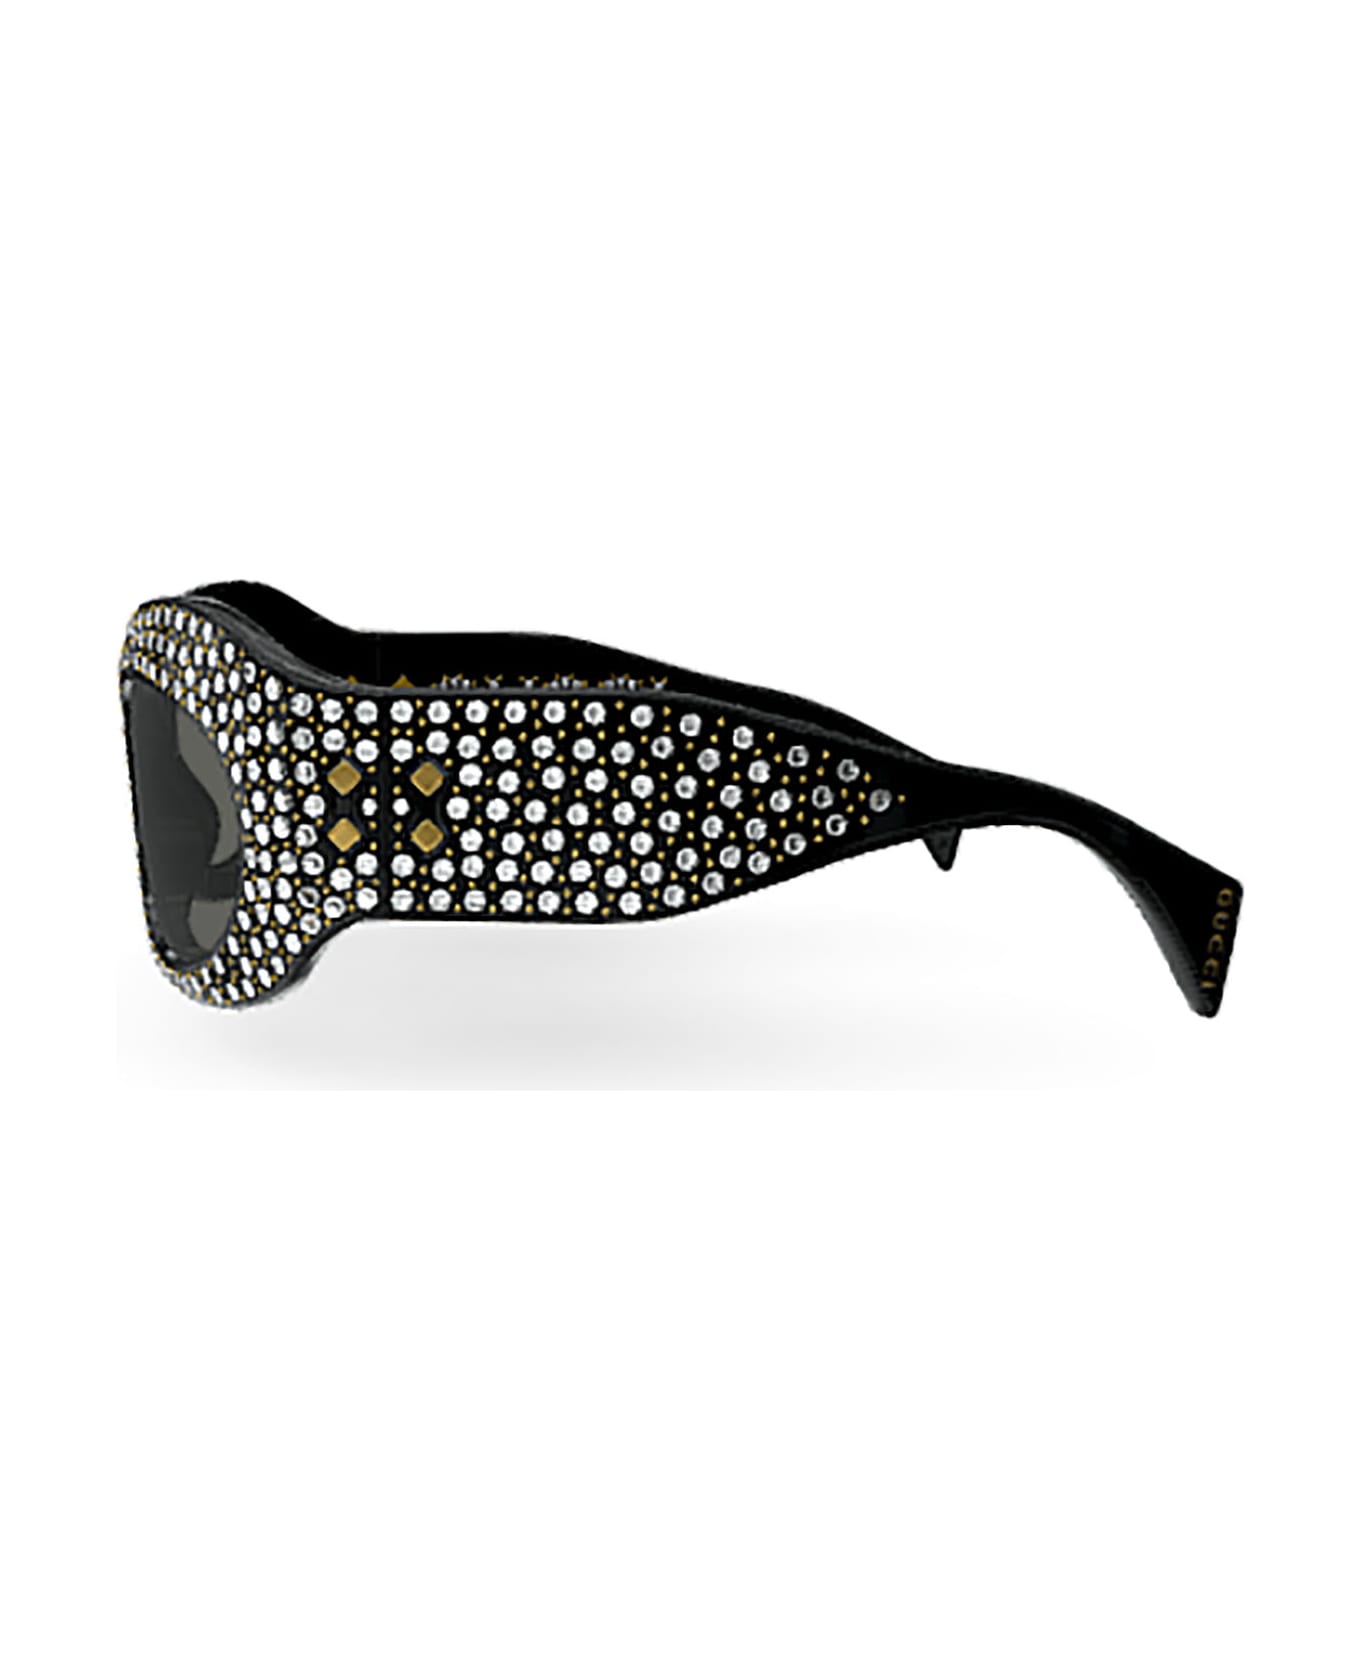 Gucci Eyewear GG1463S Sunglasses - Black Black Grey